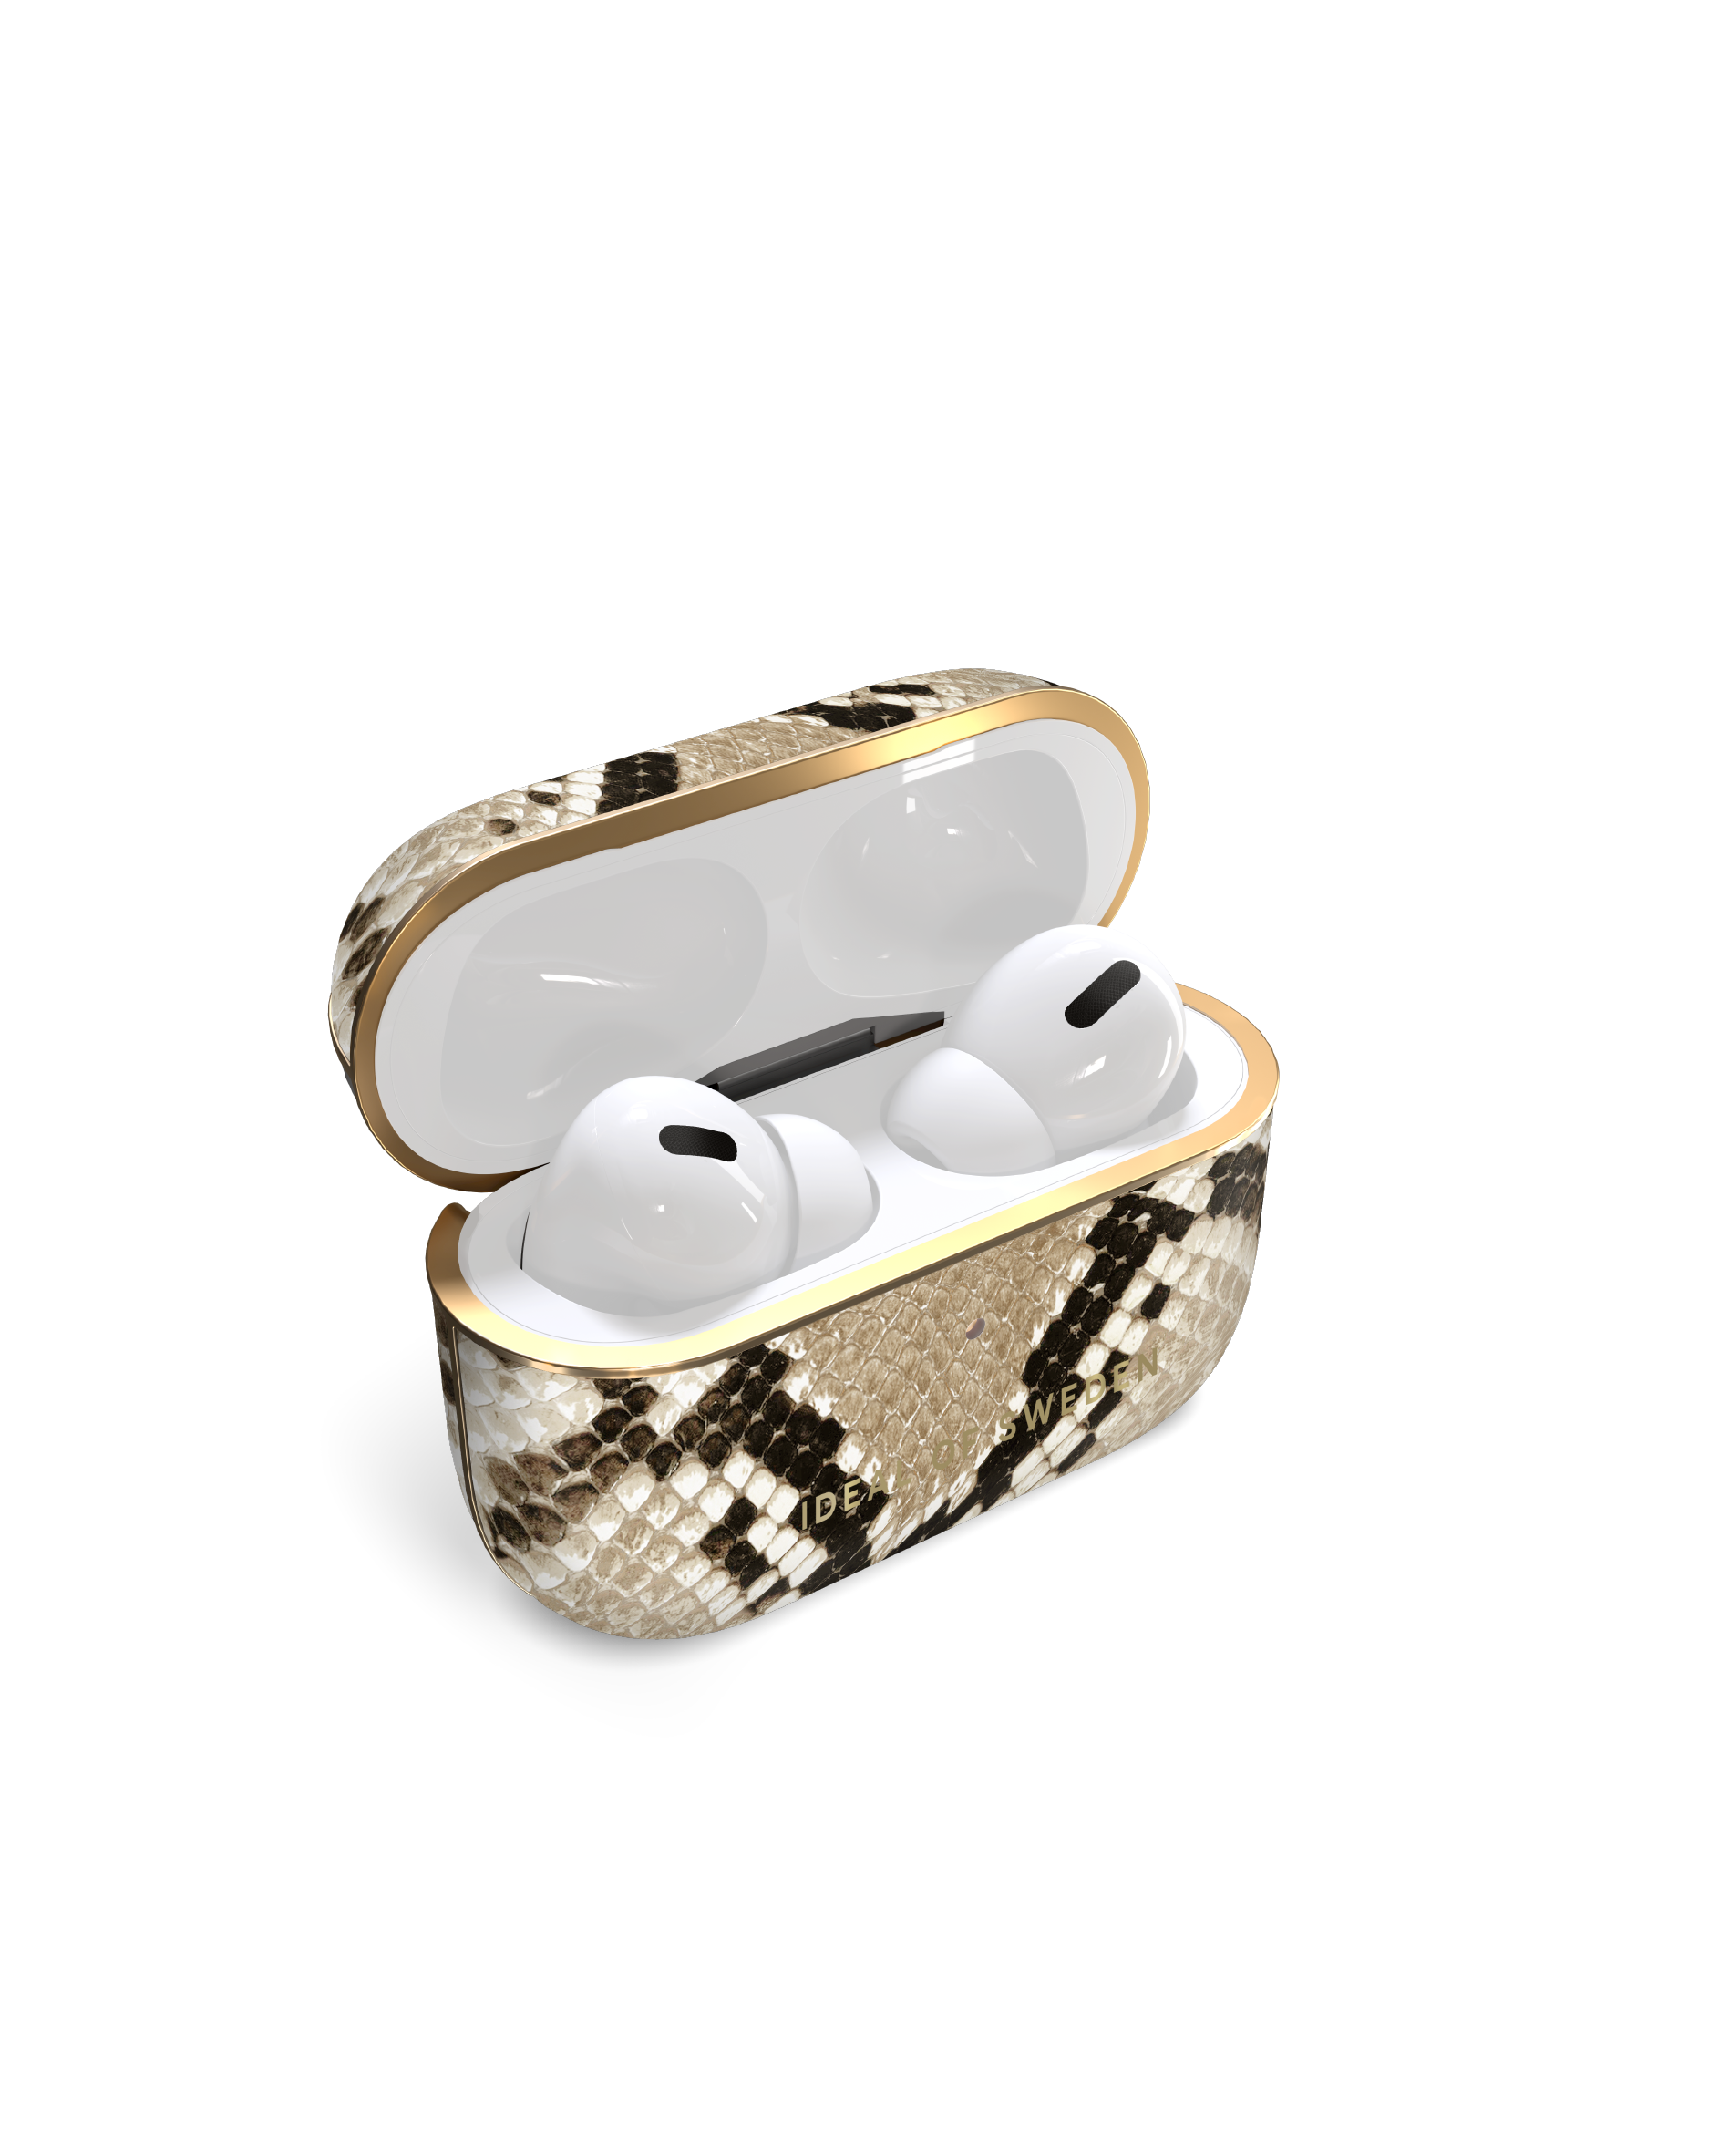 Snake Full IDEAL AirPod SWEDEN für: IDFAPC-PRO-242 OF Sahara Case Cover passend Apple